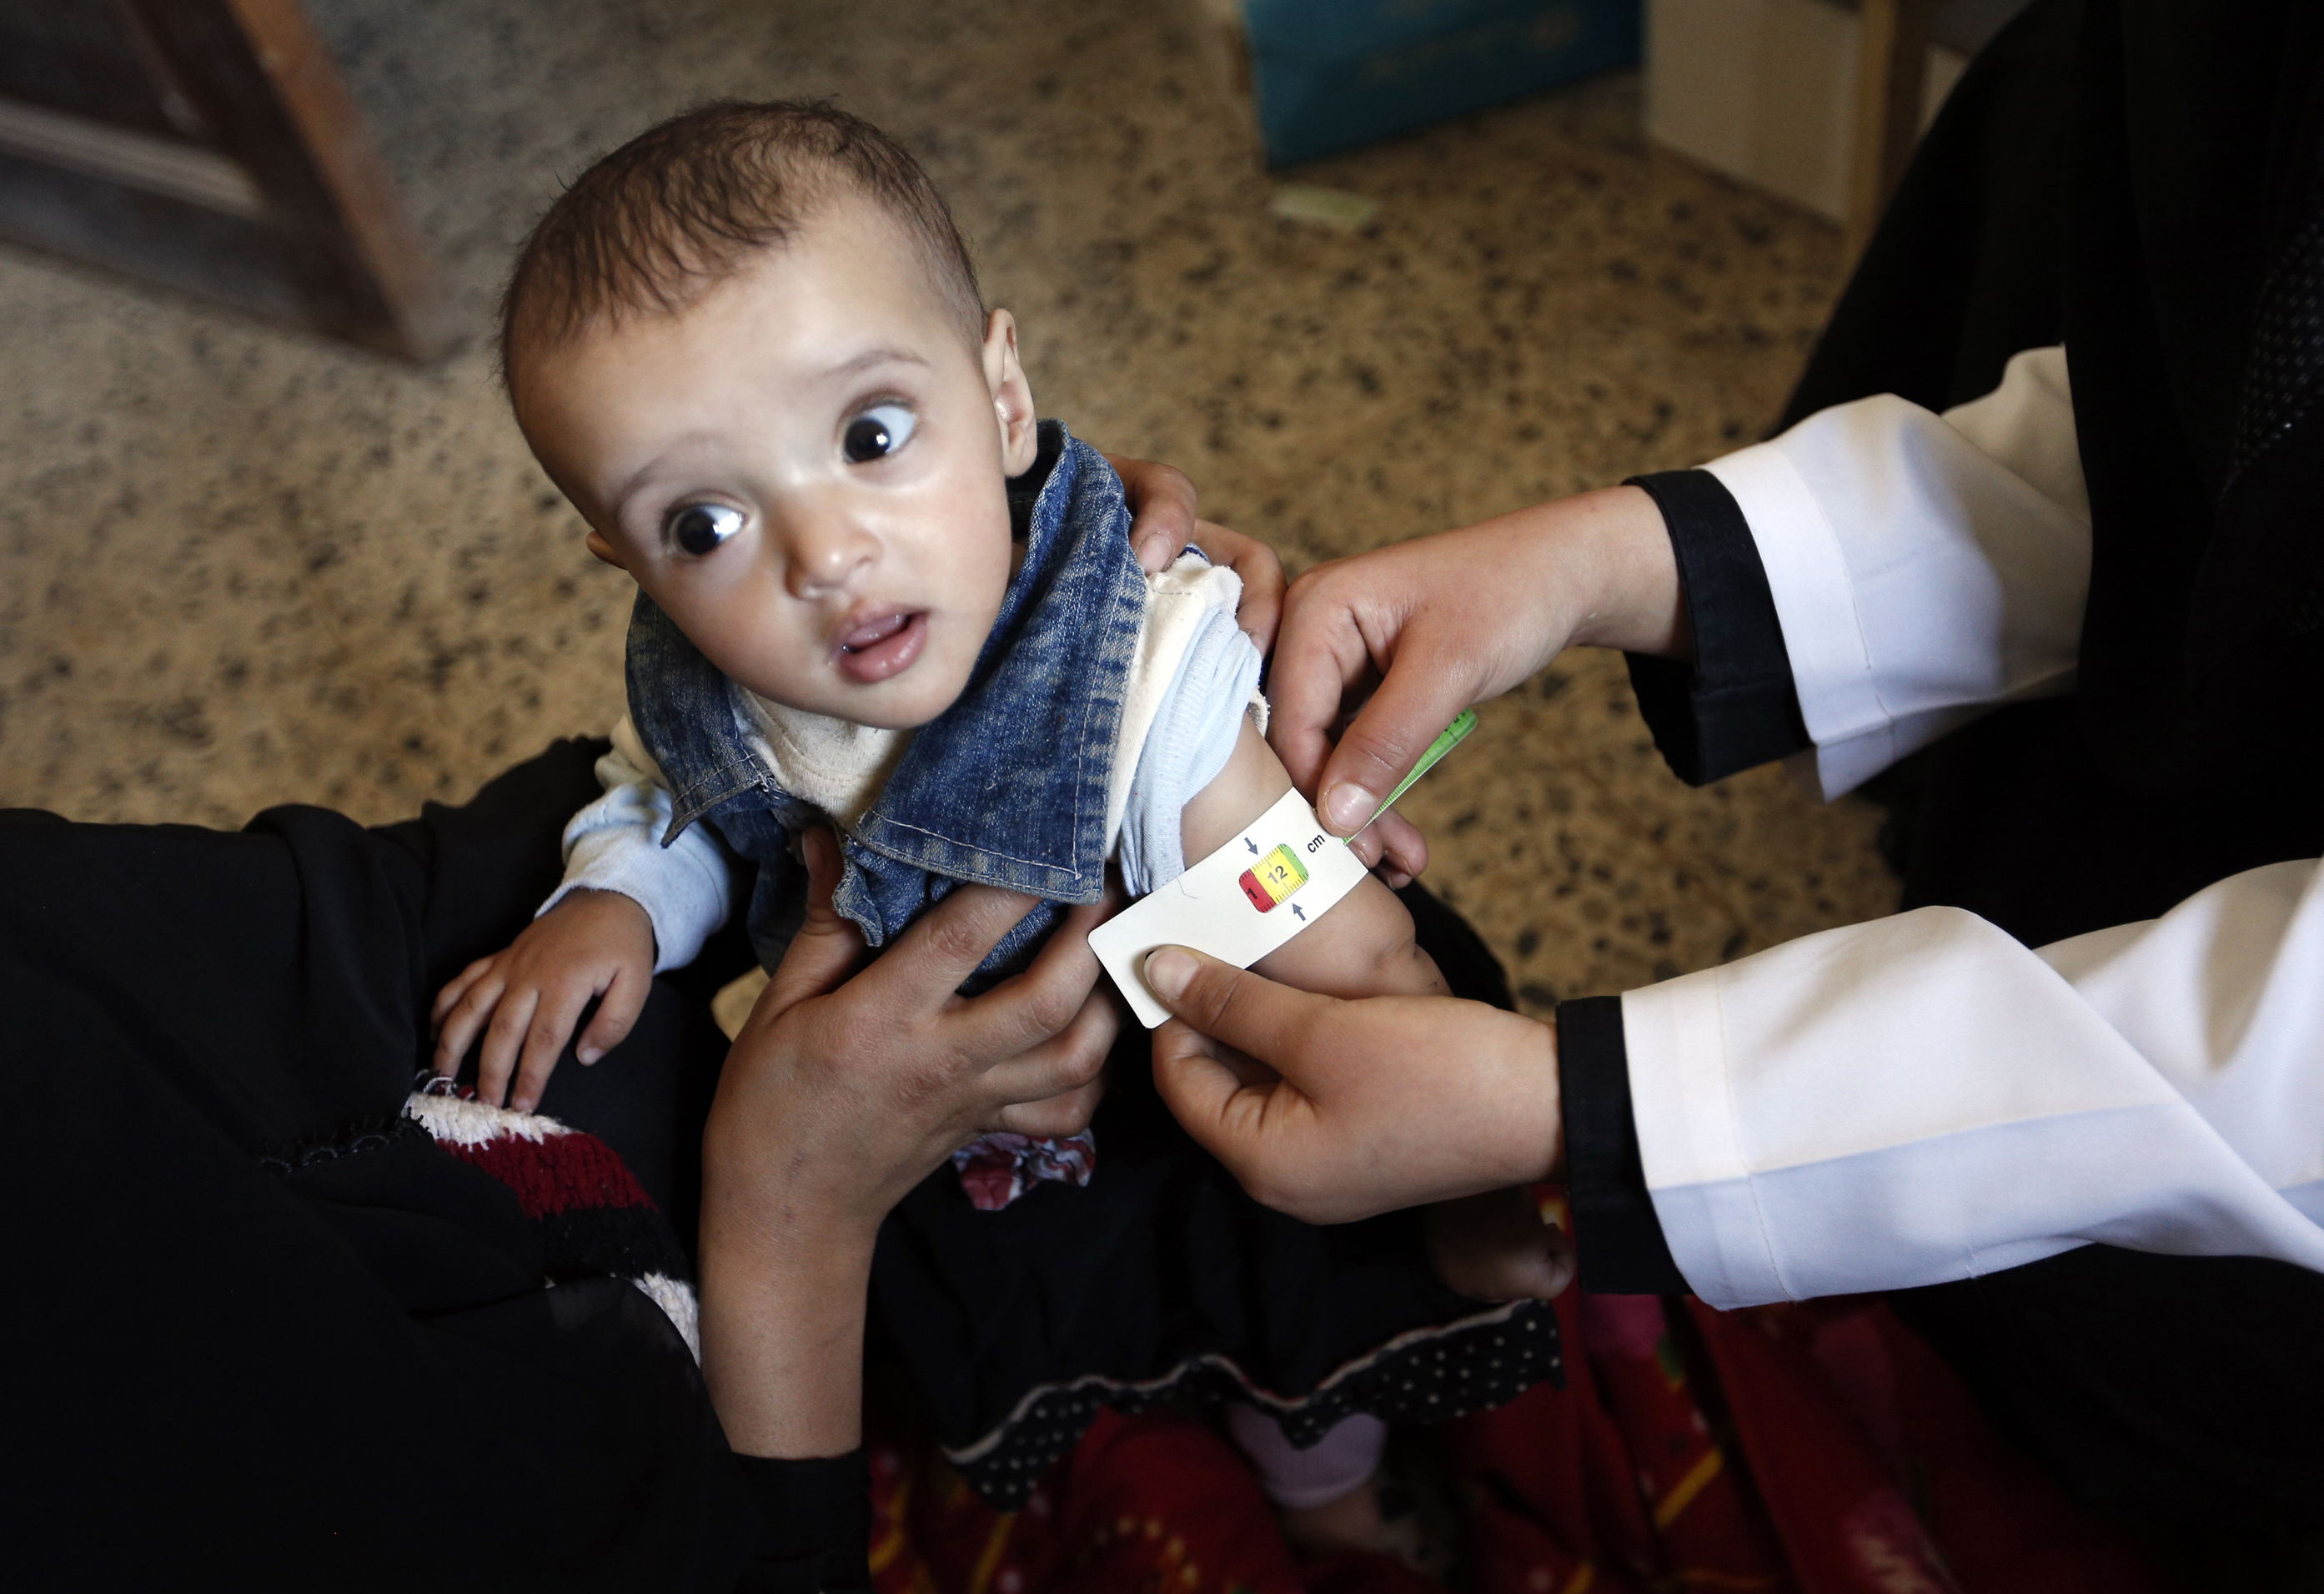 Durch sogenannte Screenings kann schnell festgestellt werden, ob ein Kind Behandlung gegen Mangelernährung benötigt. Foto: Mohammed Huwais/AFP